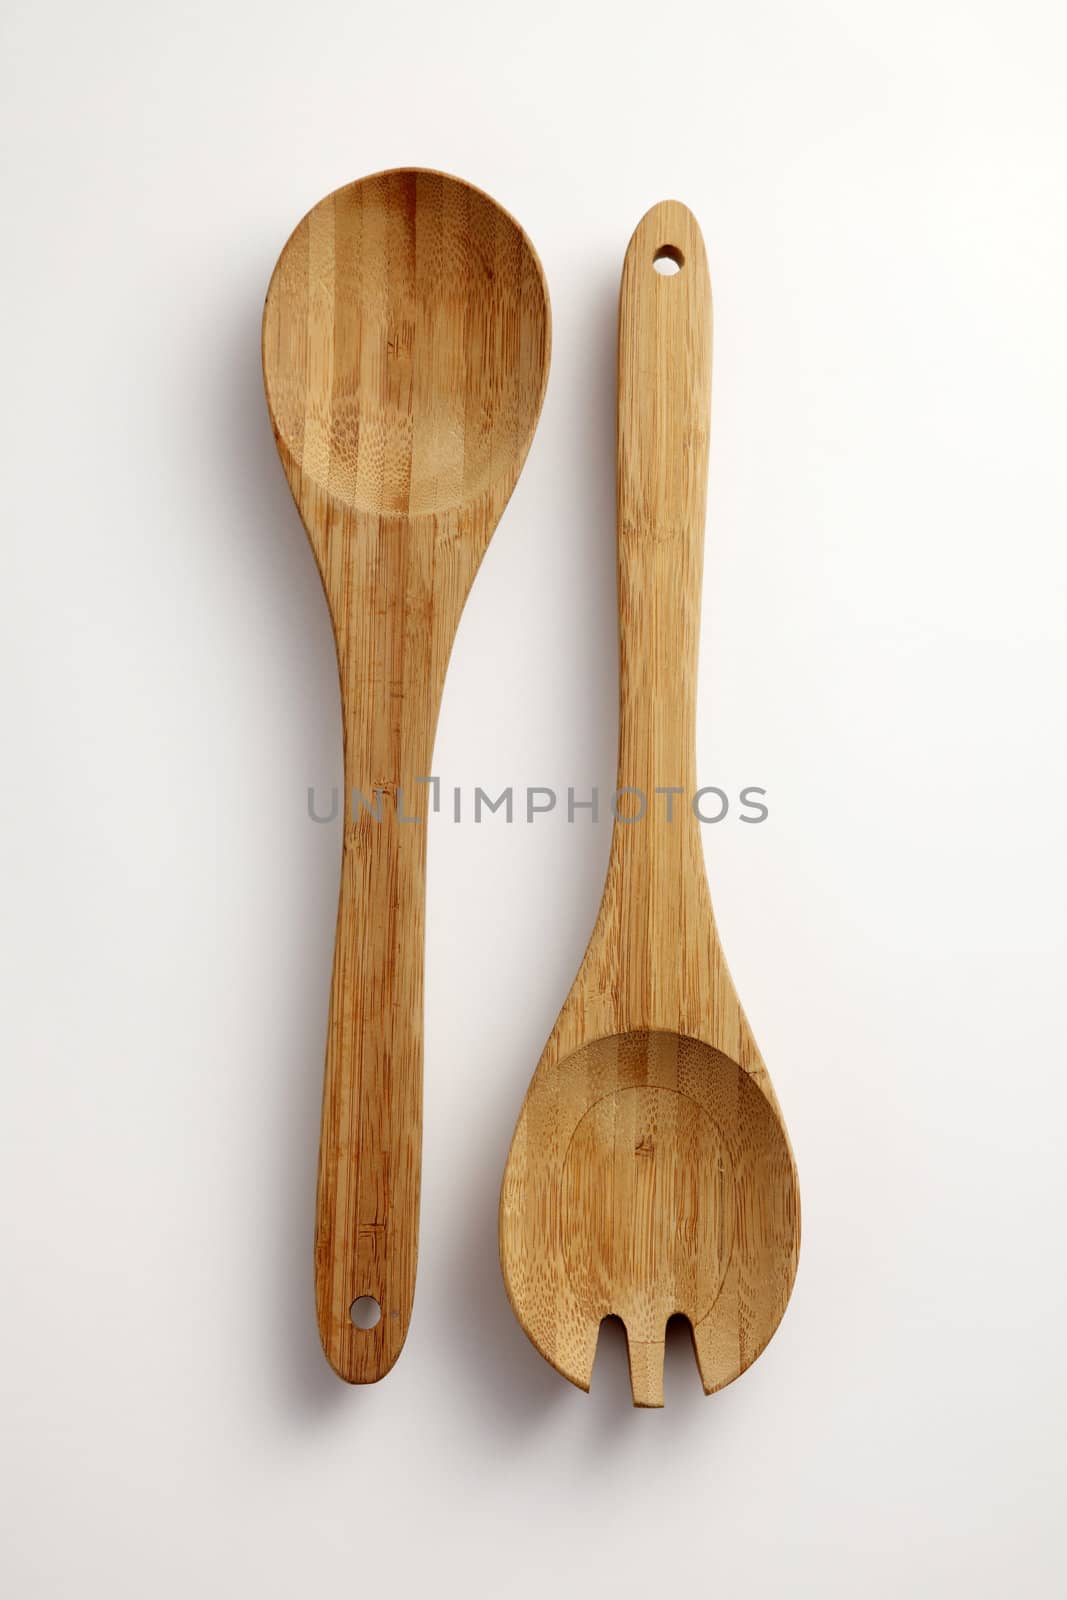 spoon and fork by eskaylim